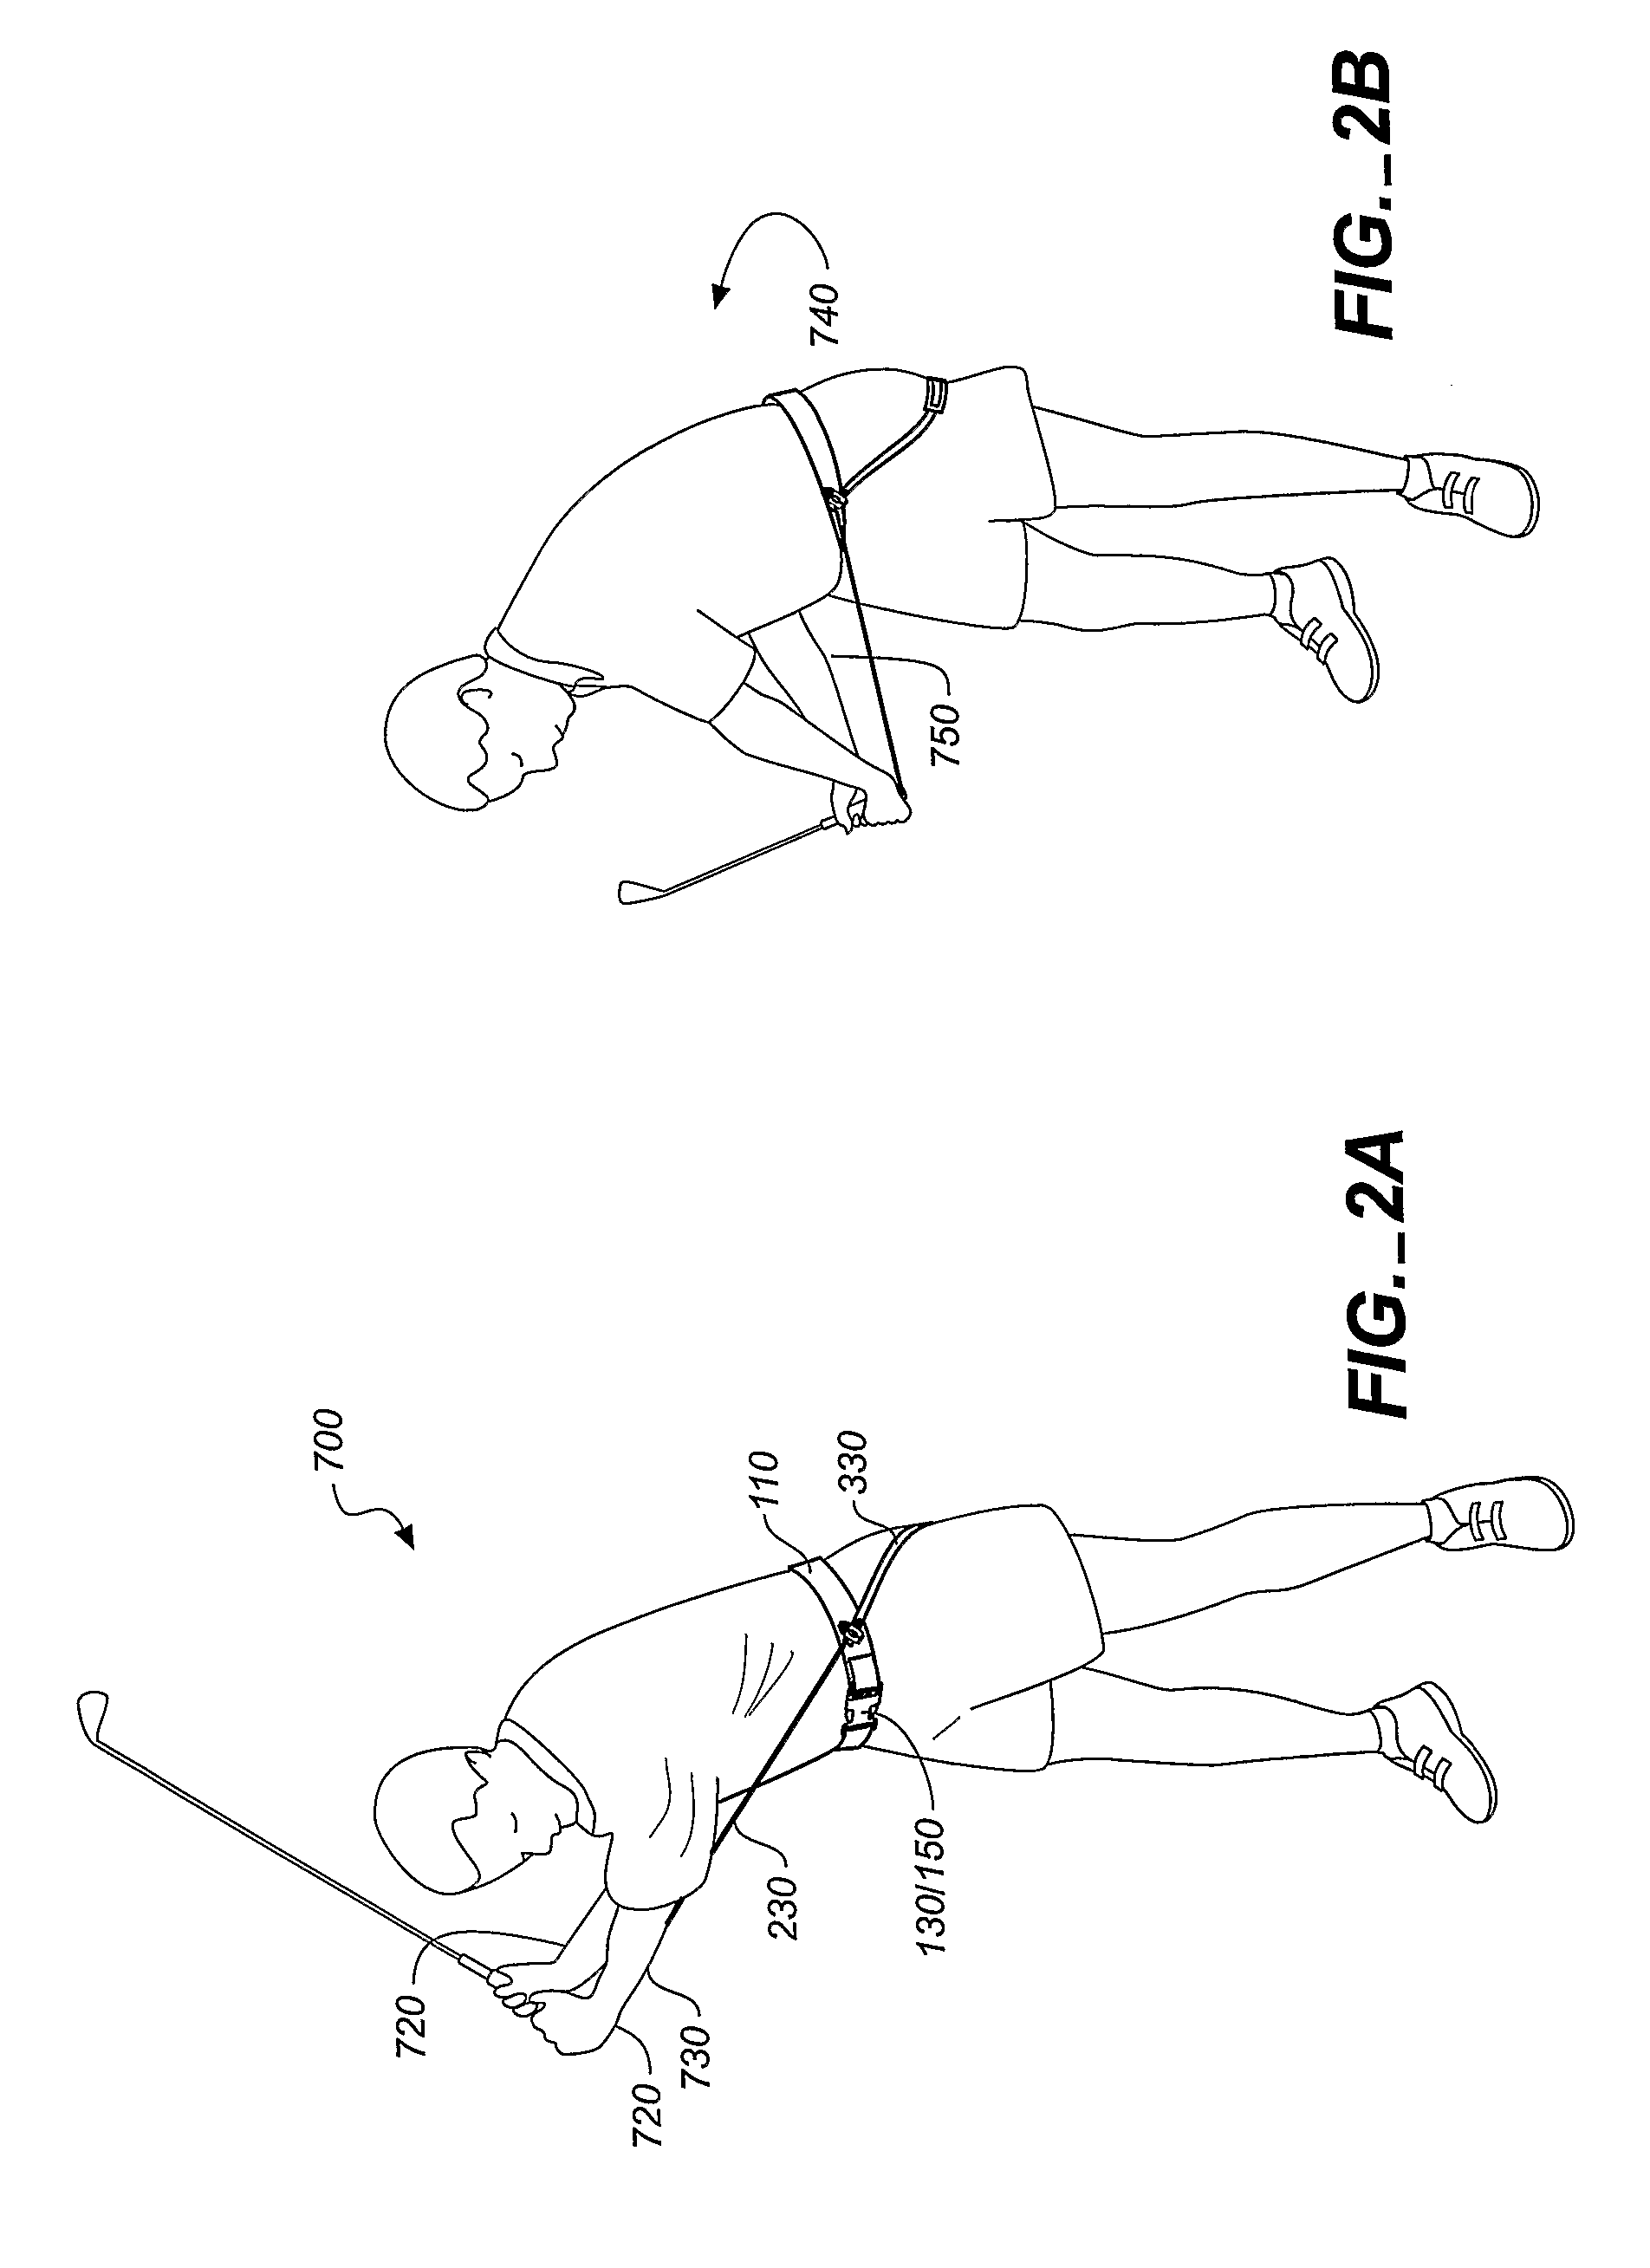 Multi-sport swing training apparatus